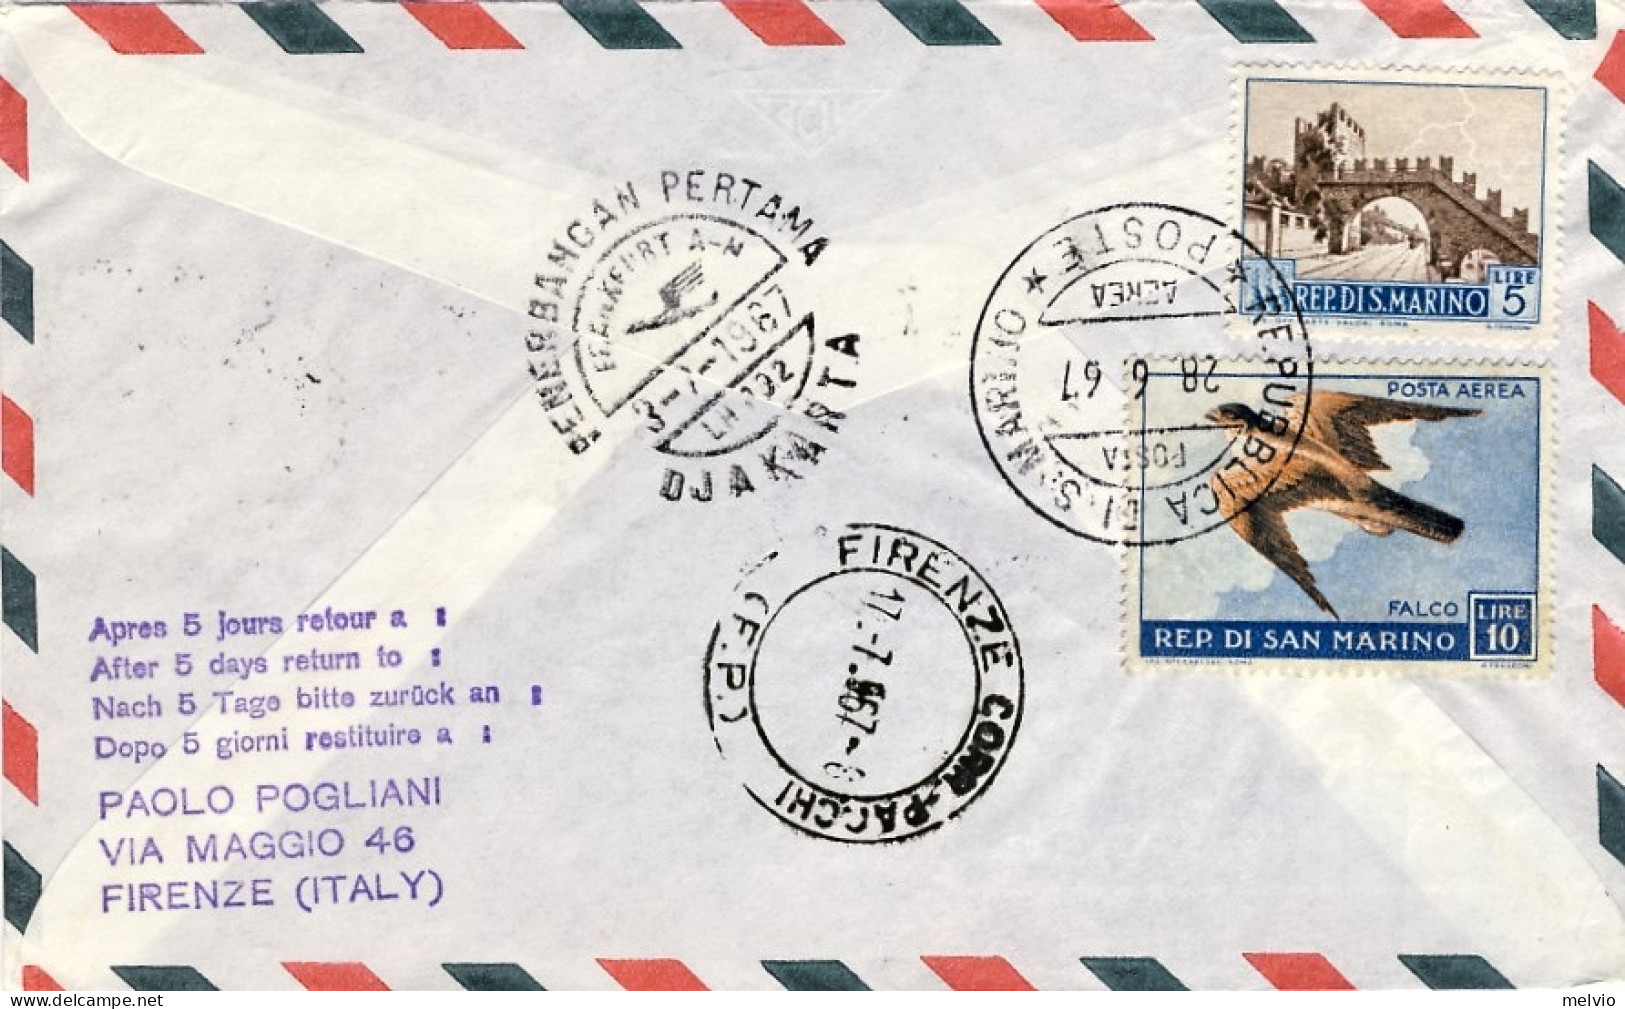 San Marino-1967 I^volo Lufthansa LH 692 Francoforte-Djakarta - Posta Aerea